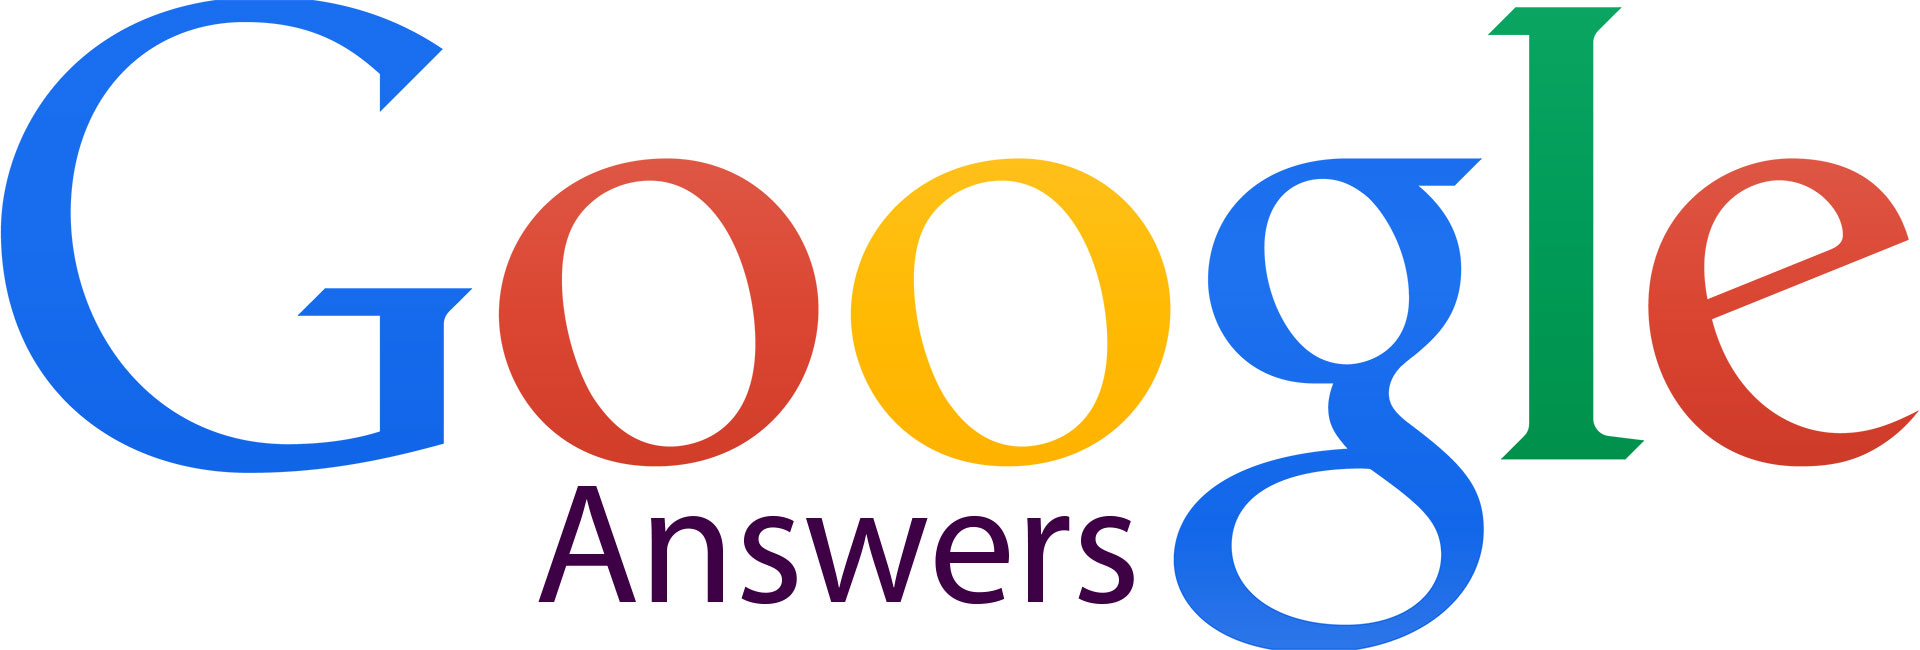 لوگوی Google Answers